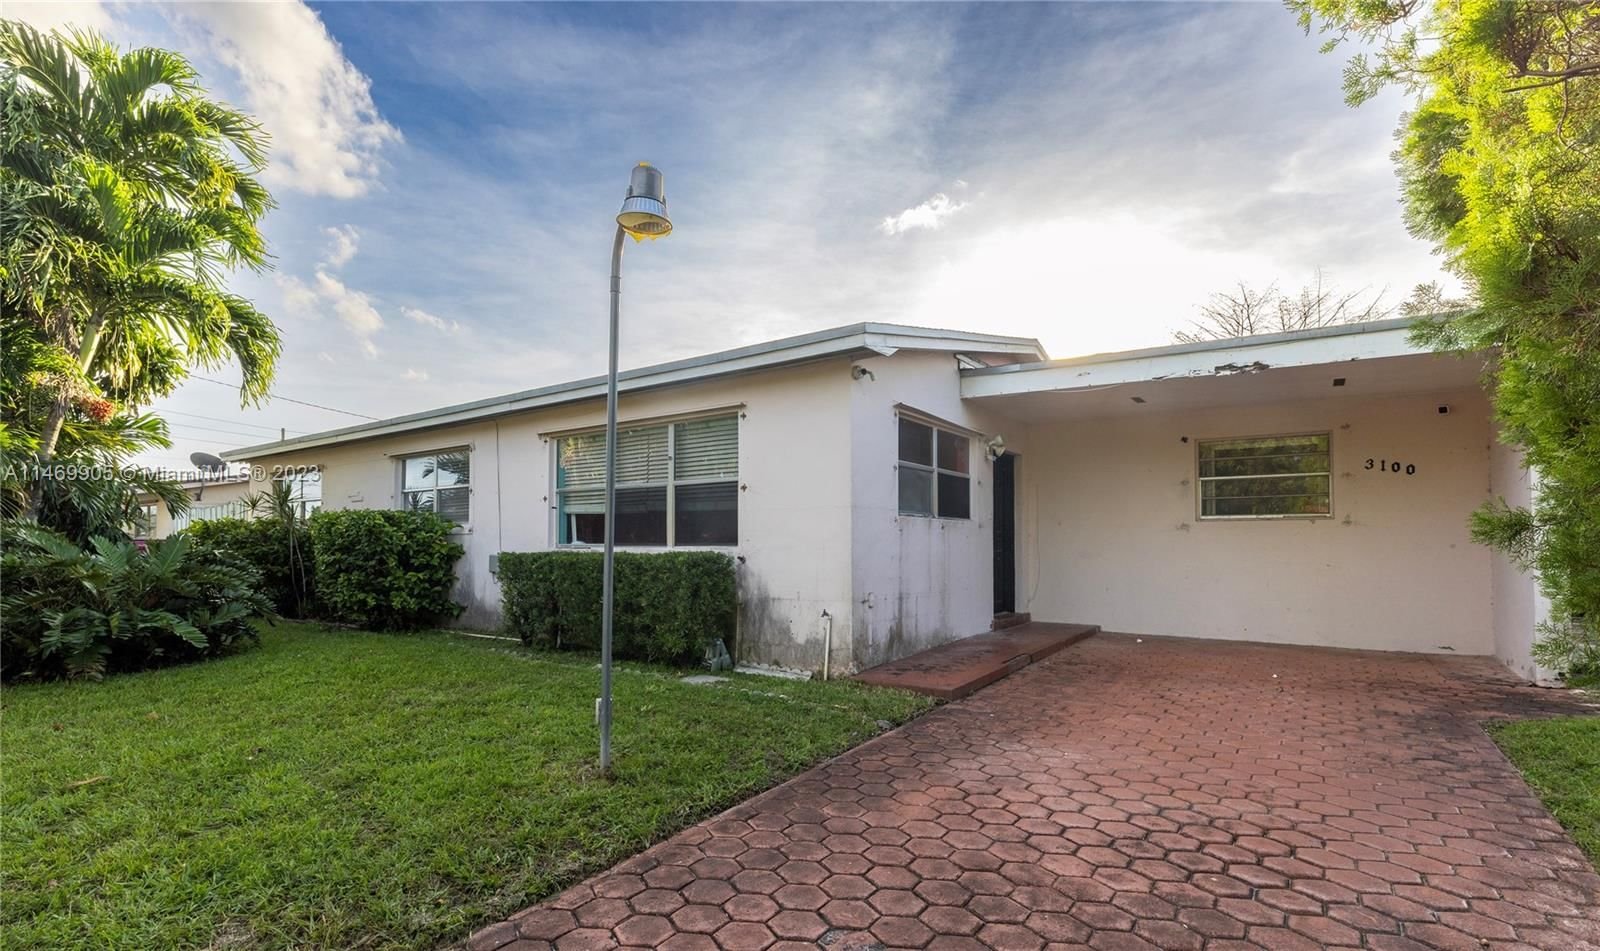 Real estate property located at 3100 106th Ave, Miami-Dade County, Miami, FL